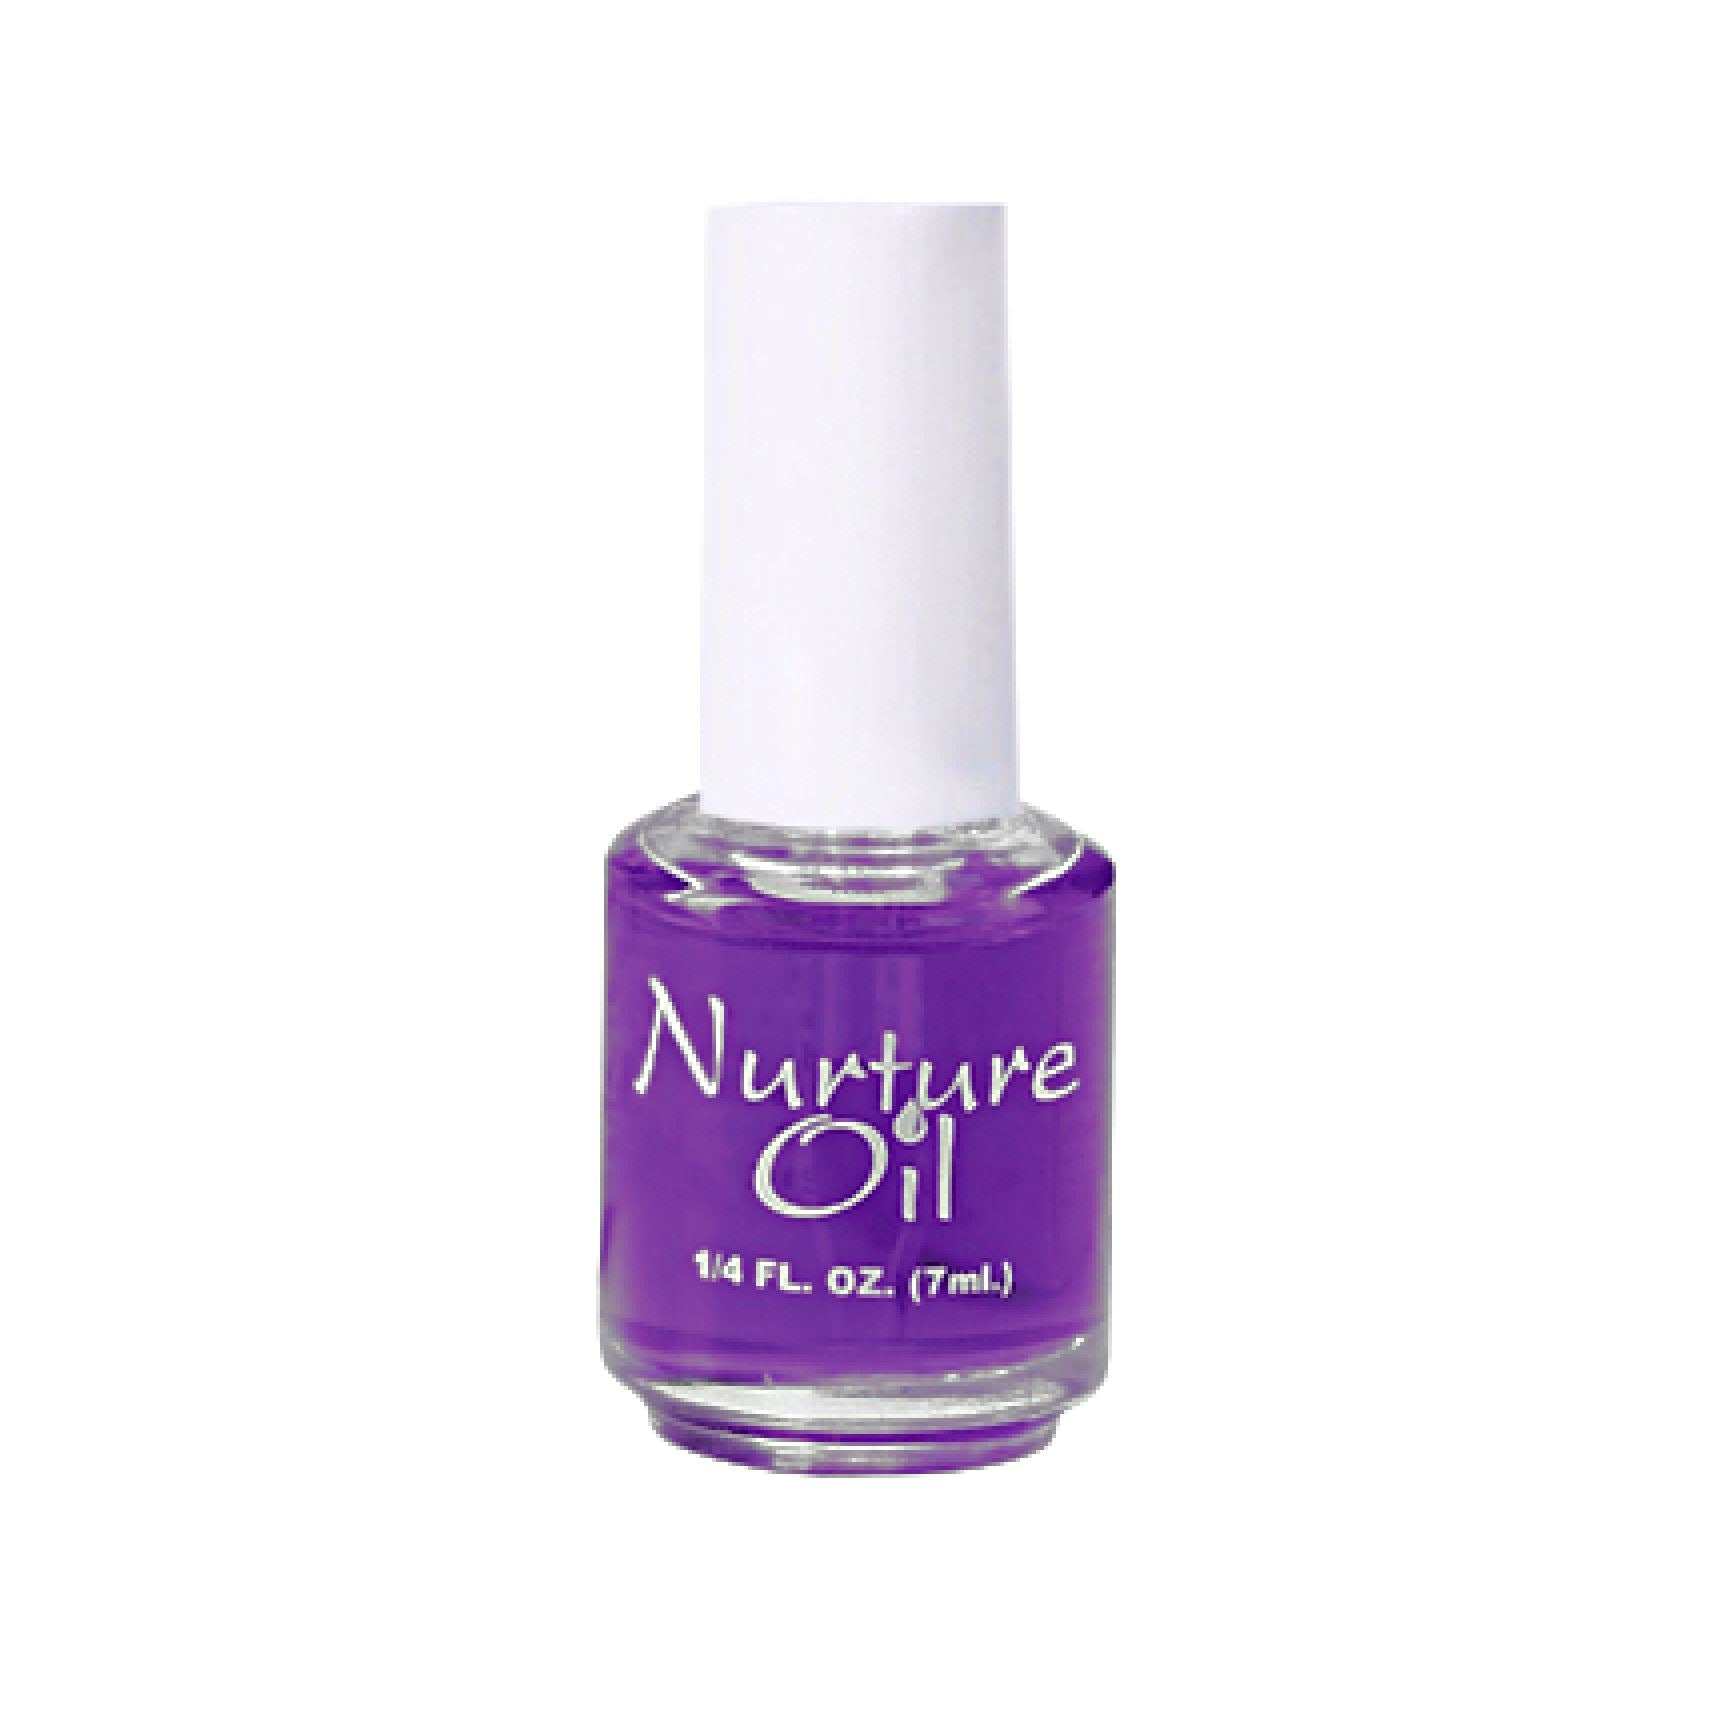 Nurture Oil - Cuticle Oil Natural Nail Care7ml